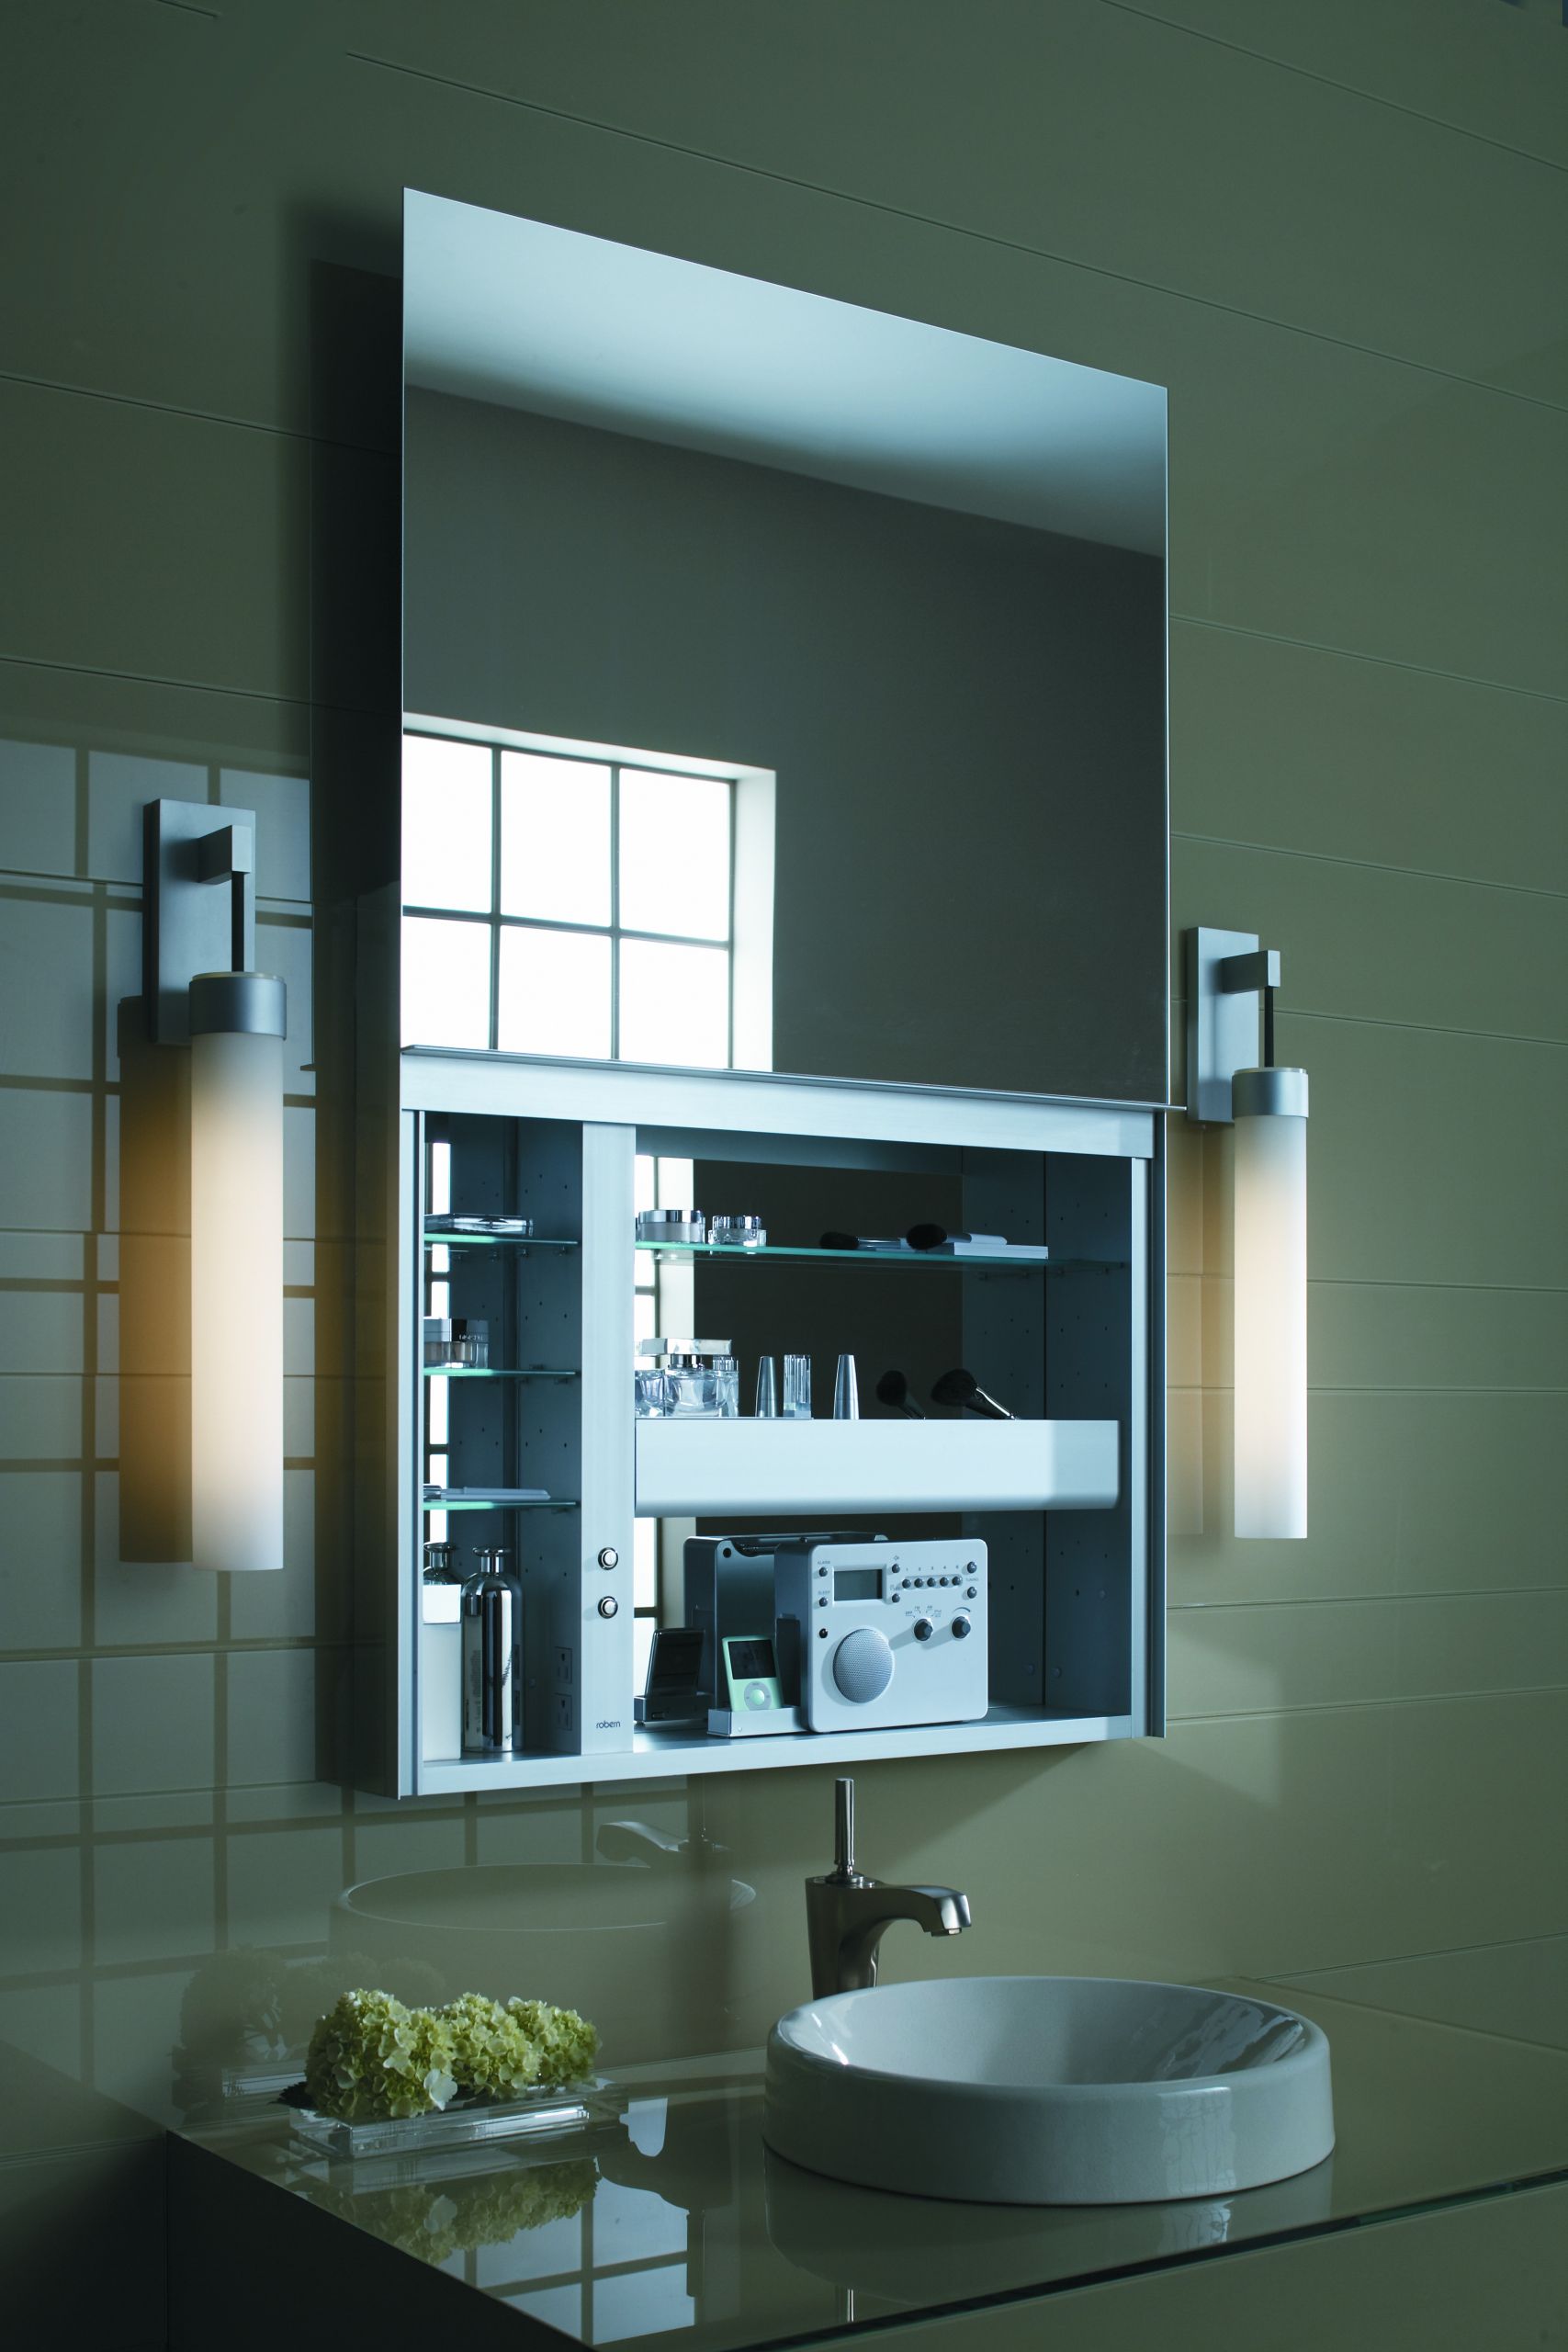 Bathroom Medicine Cabinets Recessed
 Interior Bathroom Furniture Kitchen And Bath Awesome